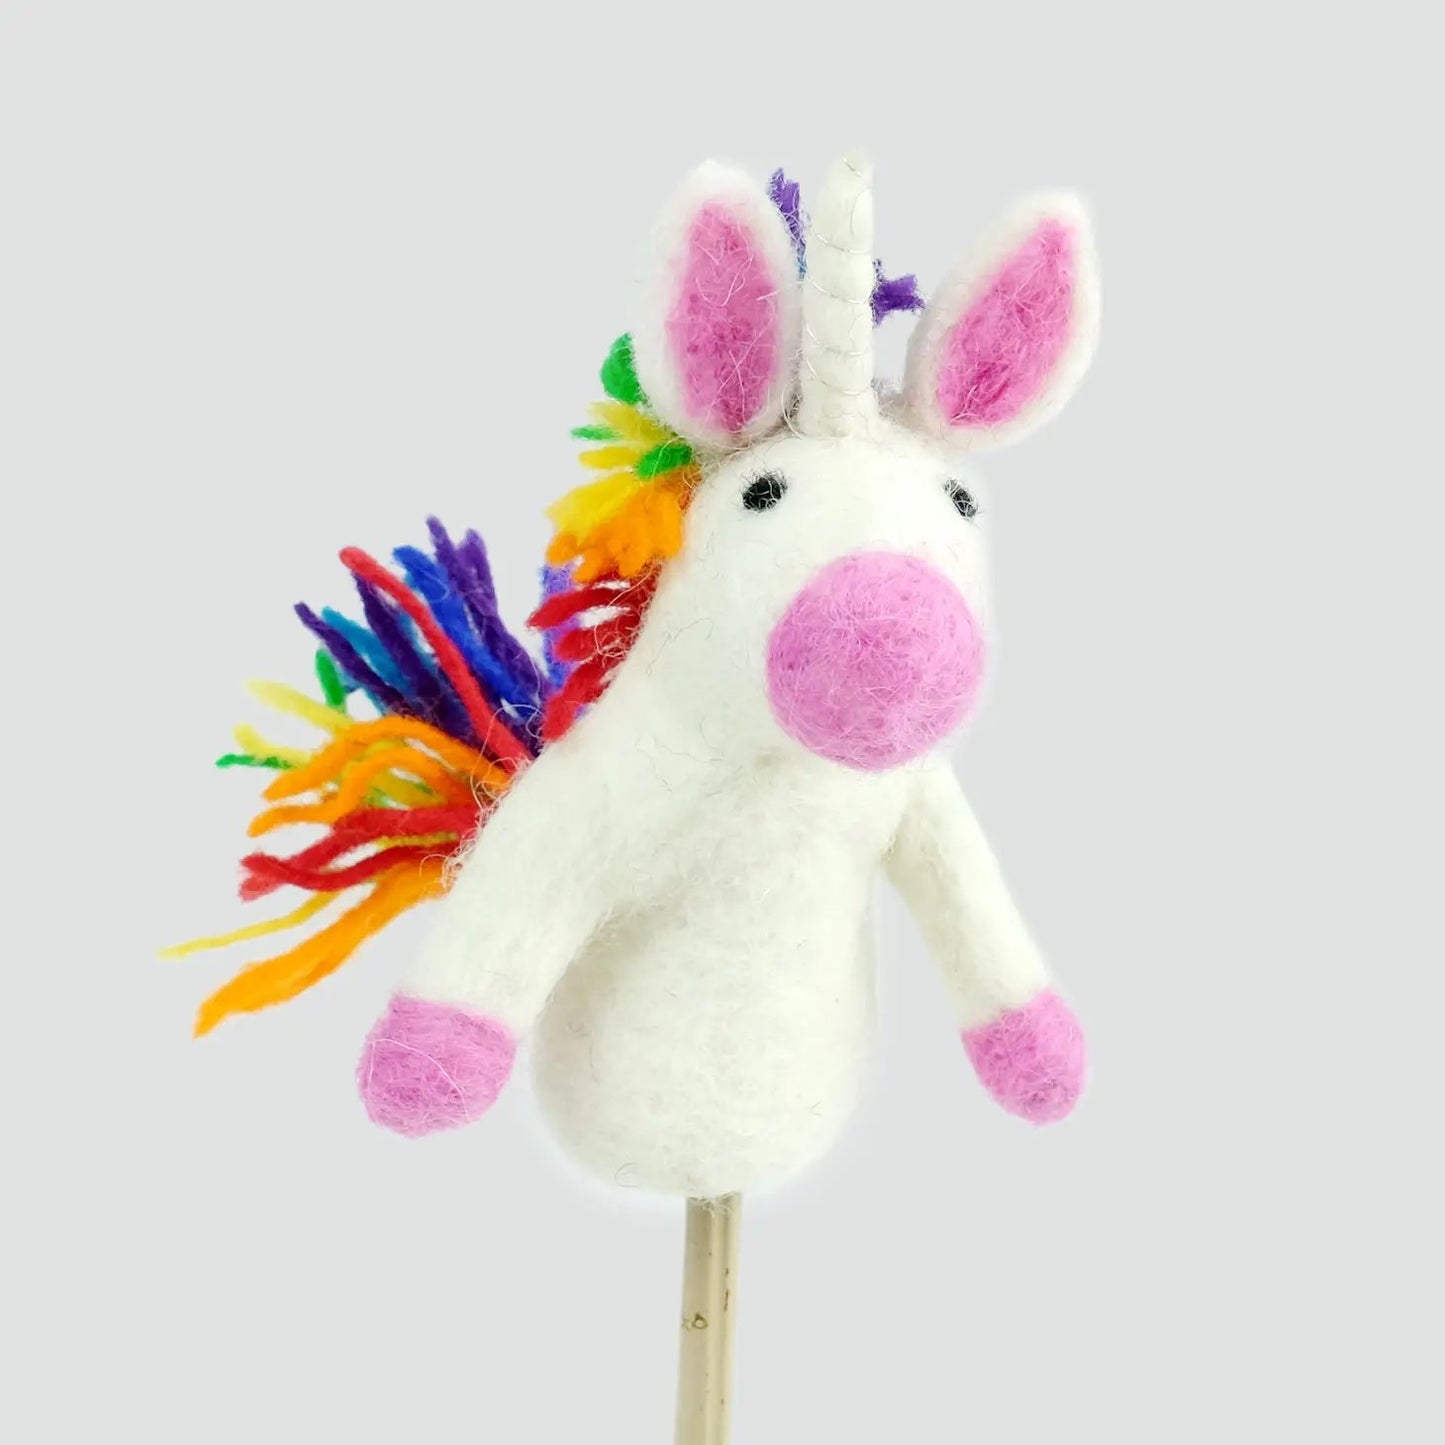 Wool Felt unicorn finger puppets